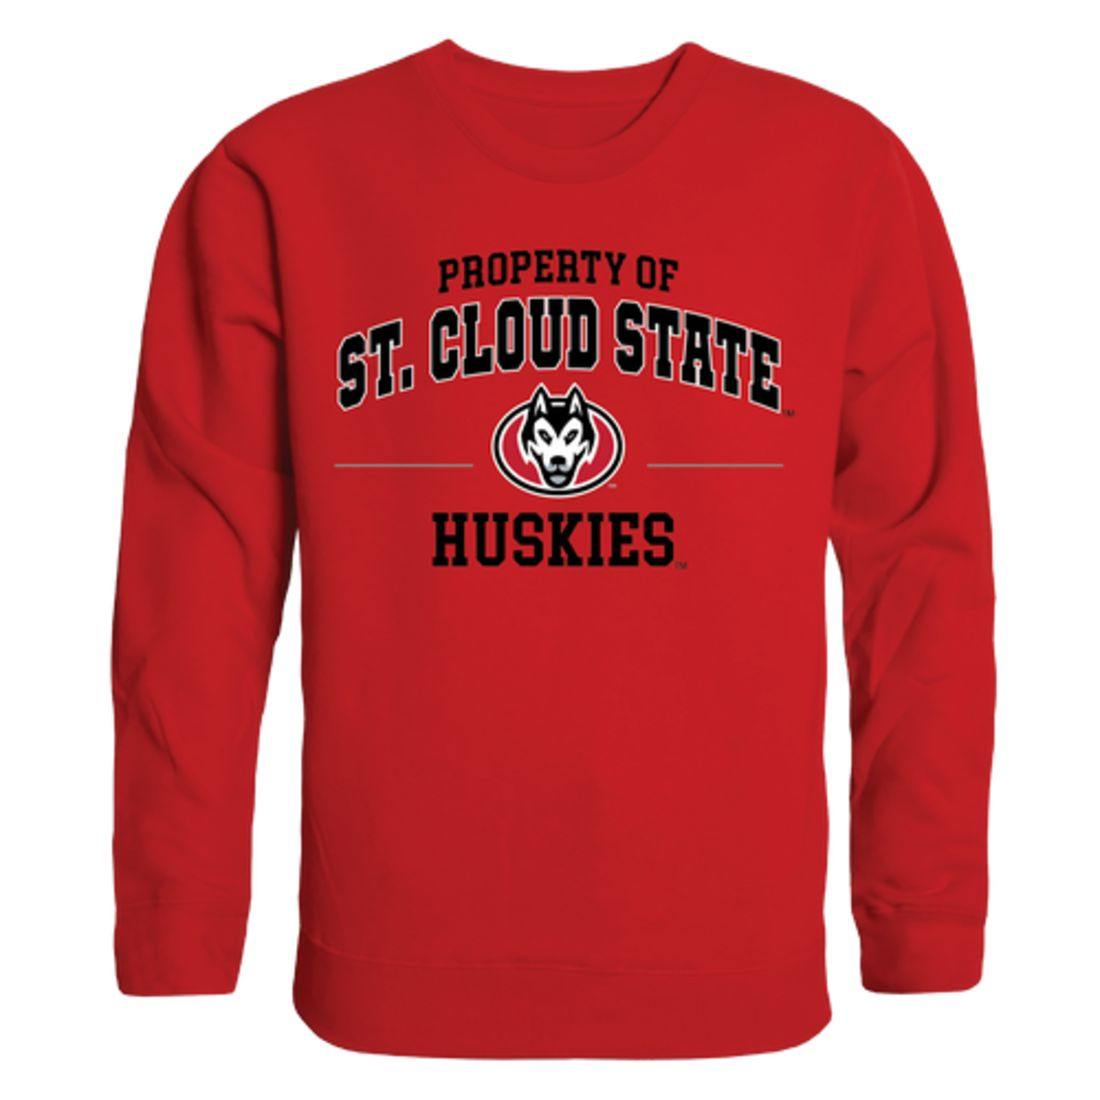 St. Cloud State University Huskies Property Crewneck Pullover Sweatshirt Sweater Red-Campus-Wardrobe